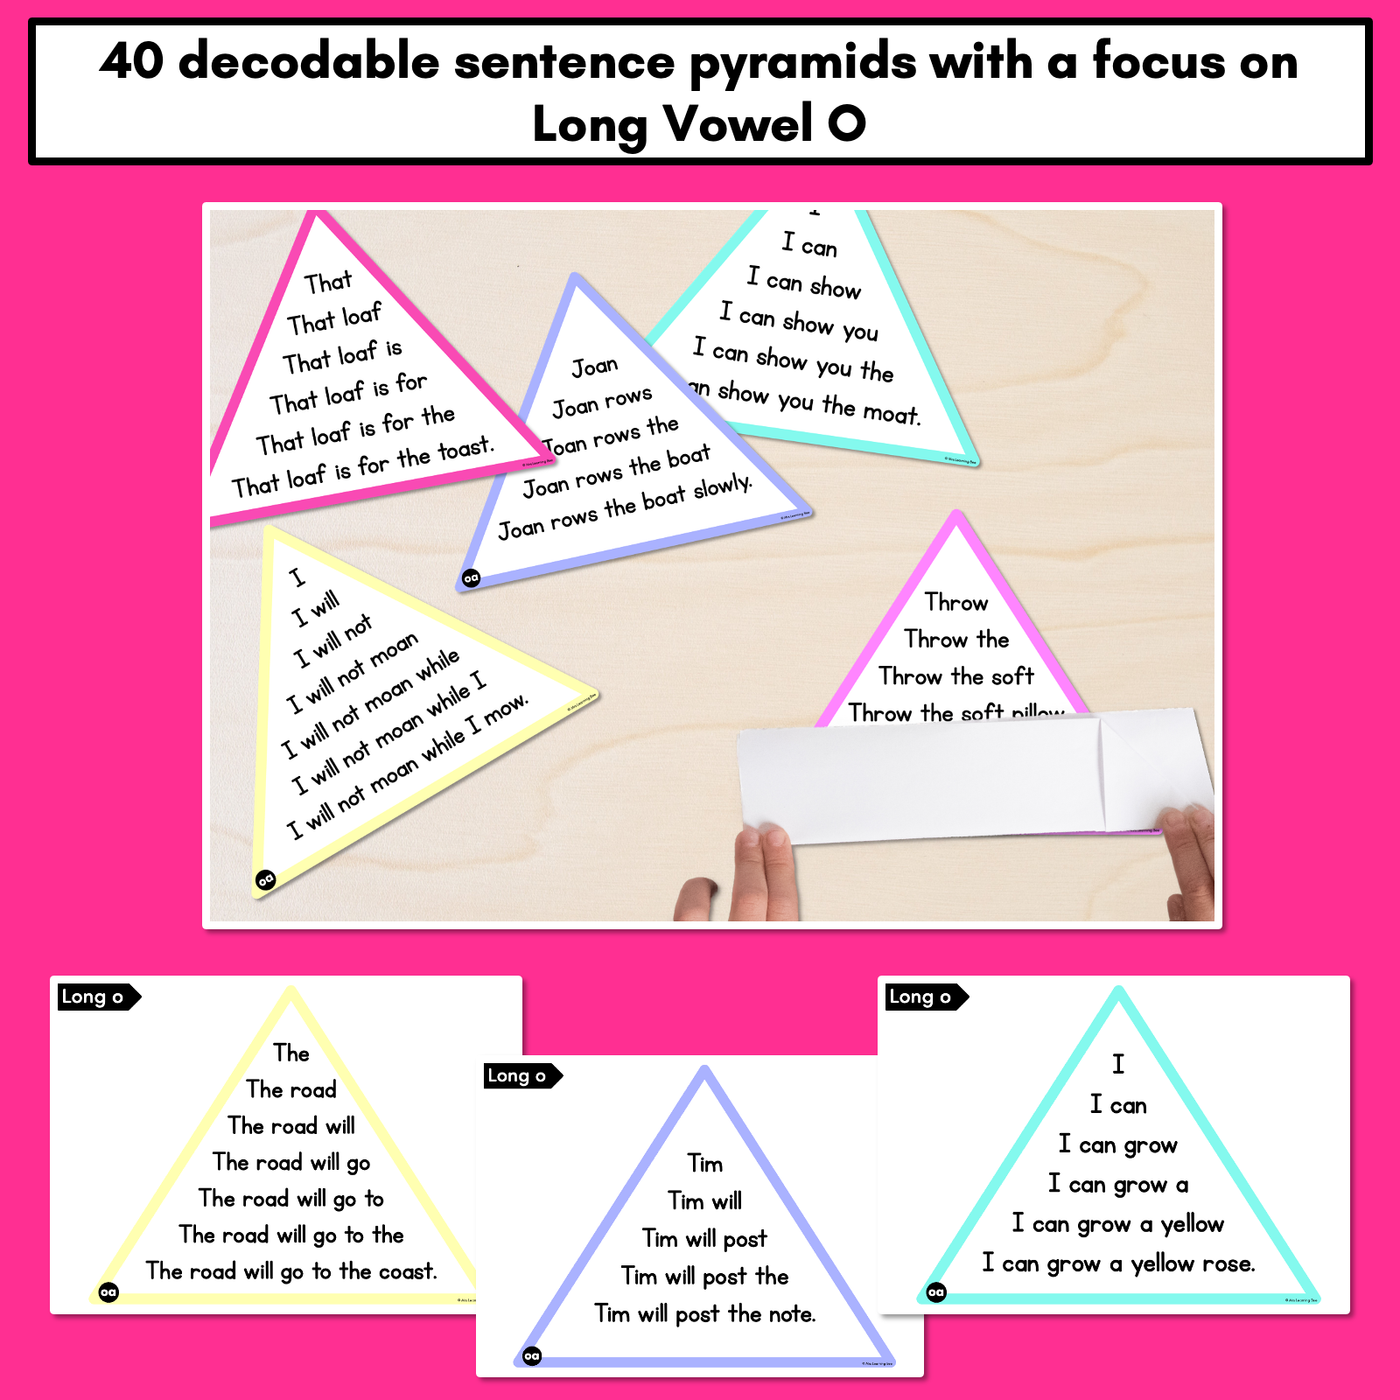 LONG VOWEL O WORDS - Decodable Sentences Pyramids - Phonics Fluency